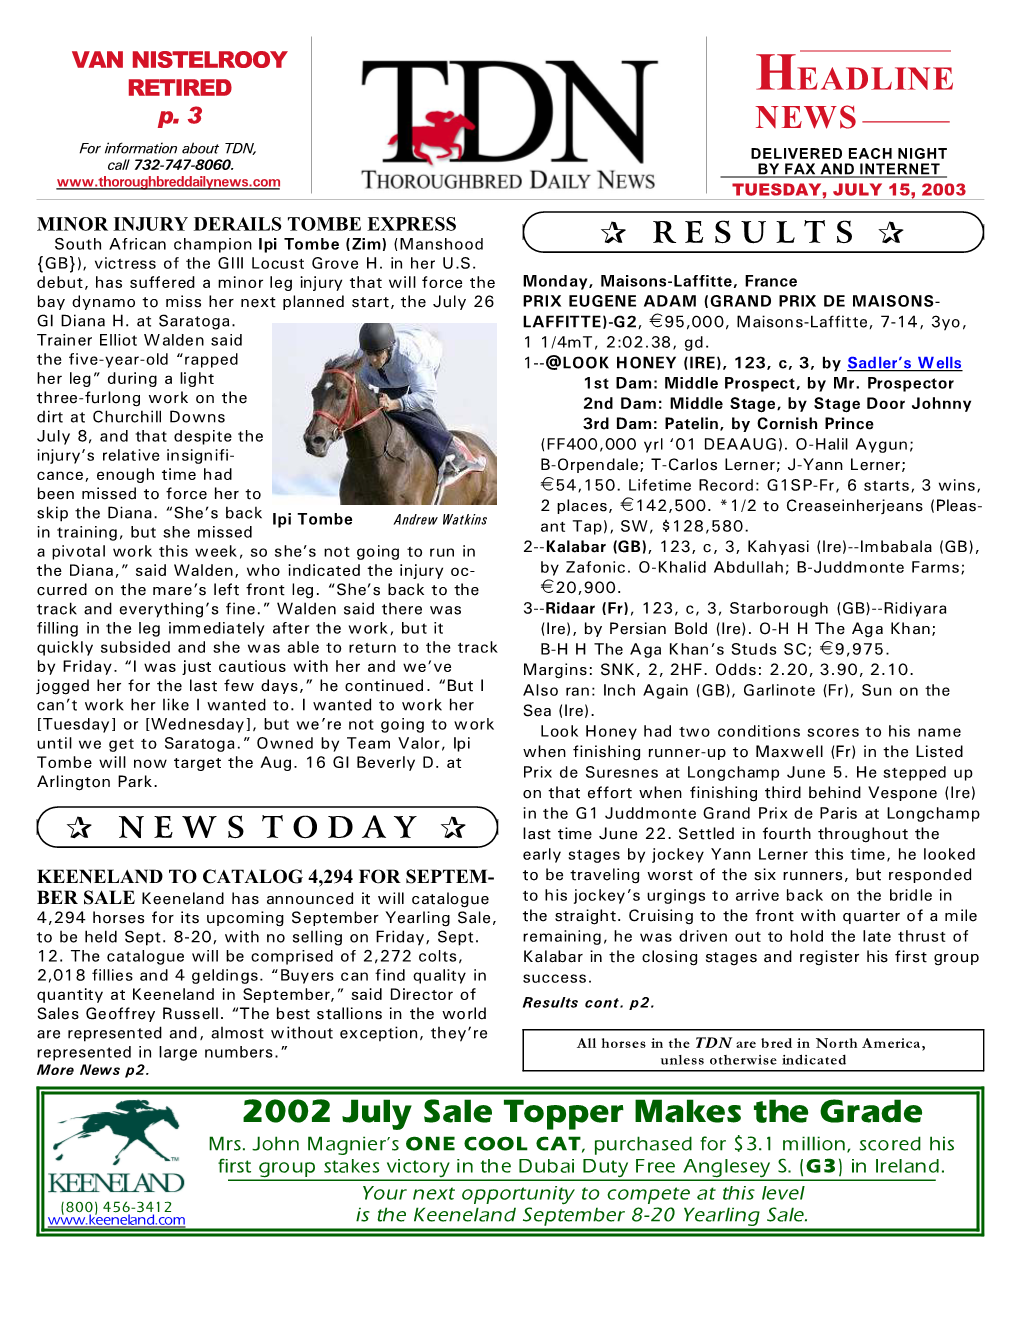 2002 July Sale Topper Makes the Grade HEADLINE NEWS